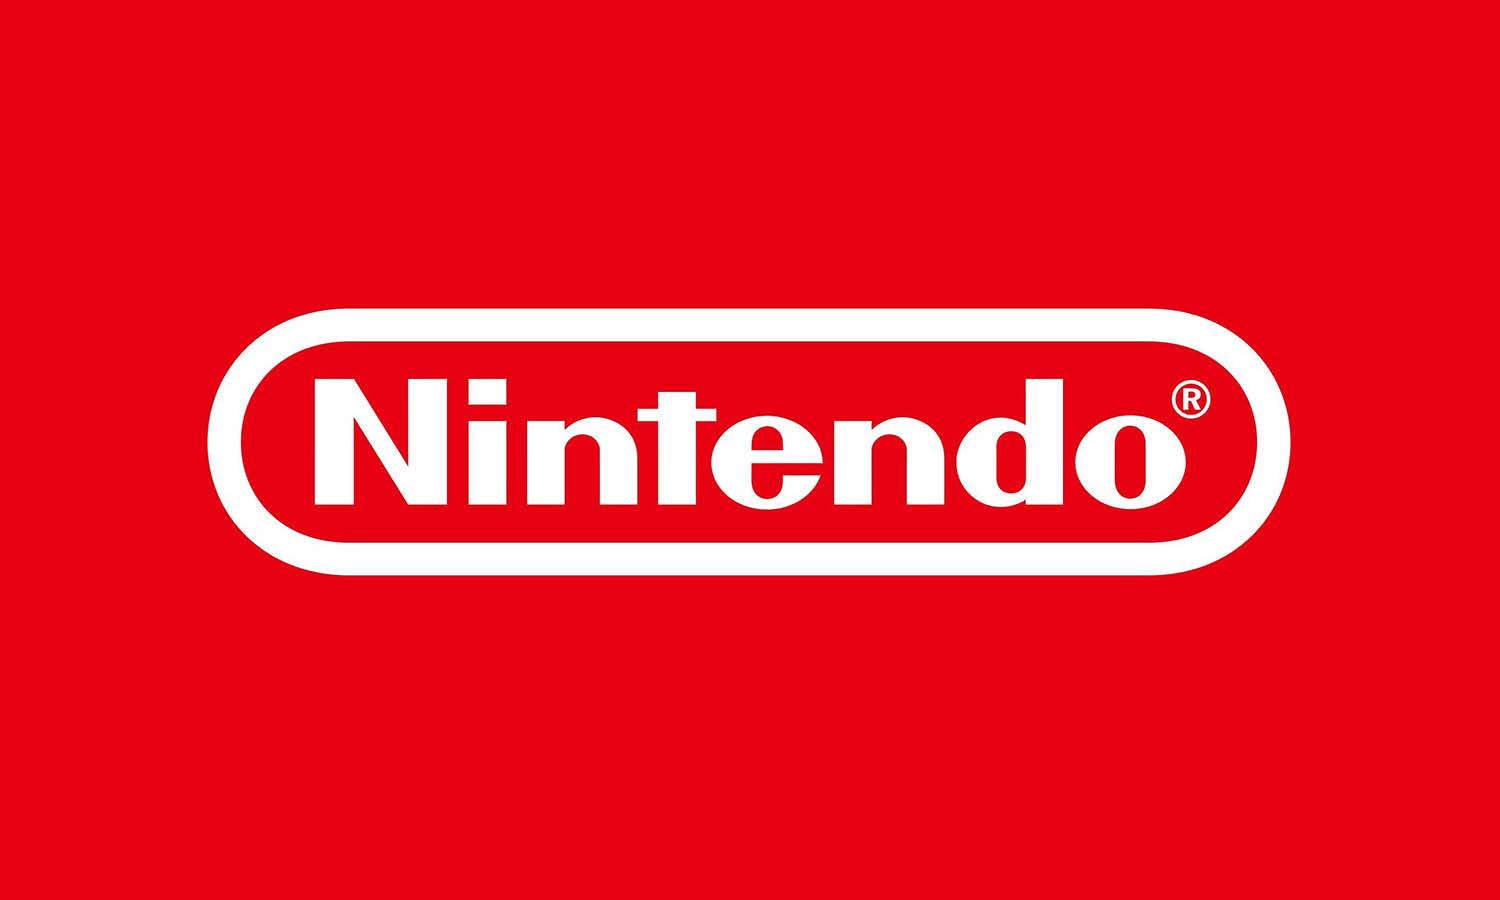 Nintendo Logo Design: History & Evolution - Kreafolk